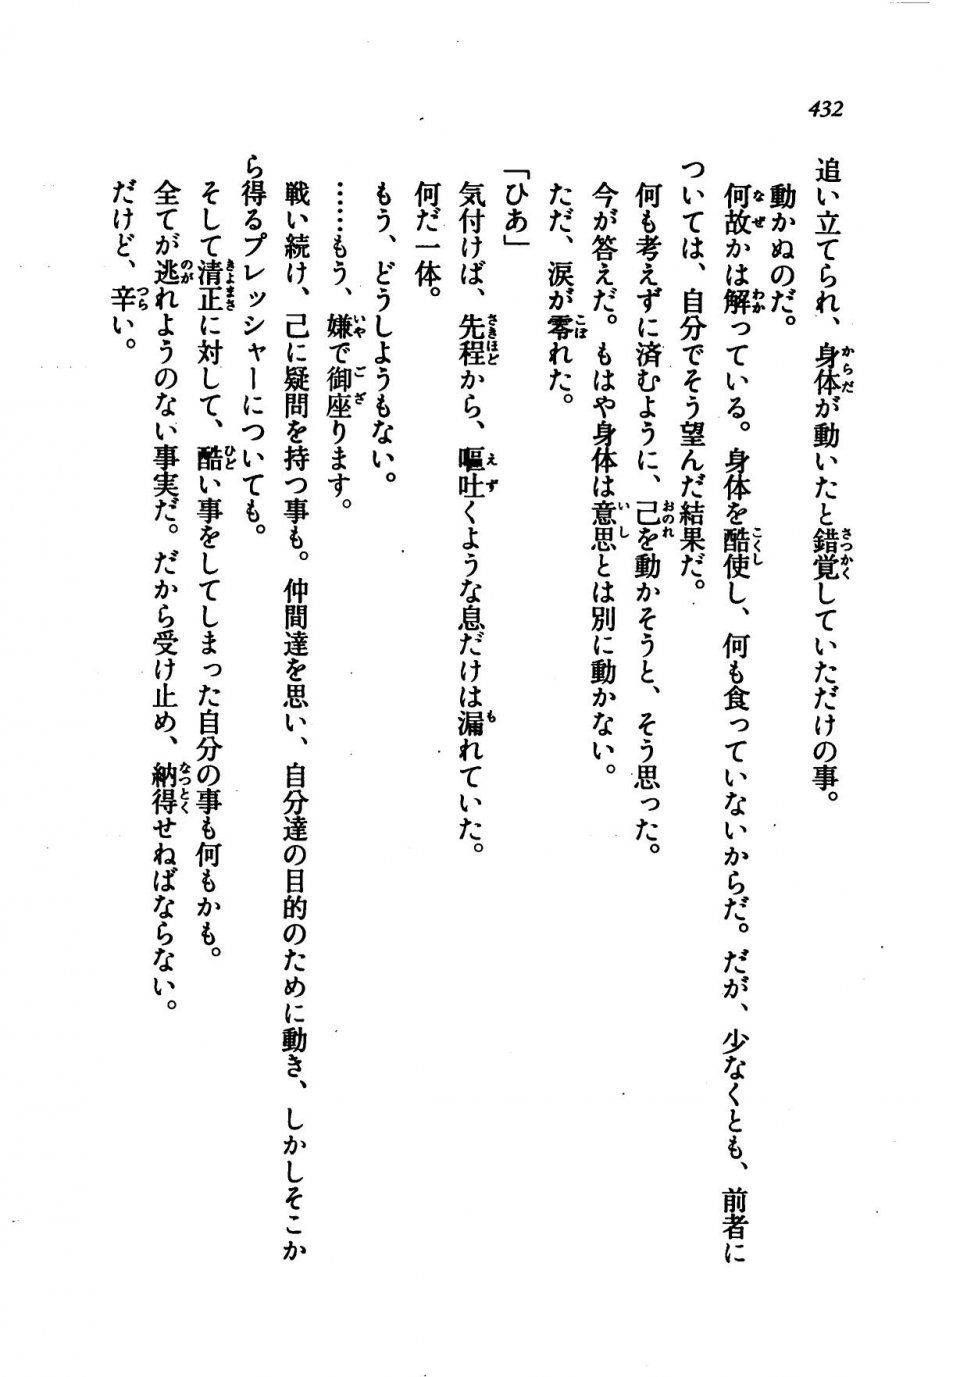 Kyoukai Senjou no Horizon LN Vol 21(8C) Part 1 - Photo #431